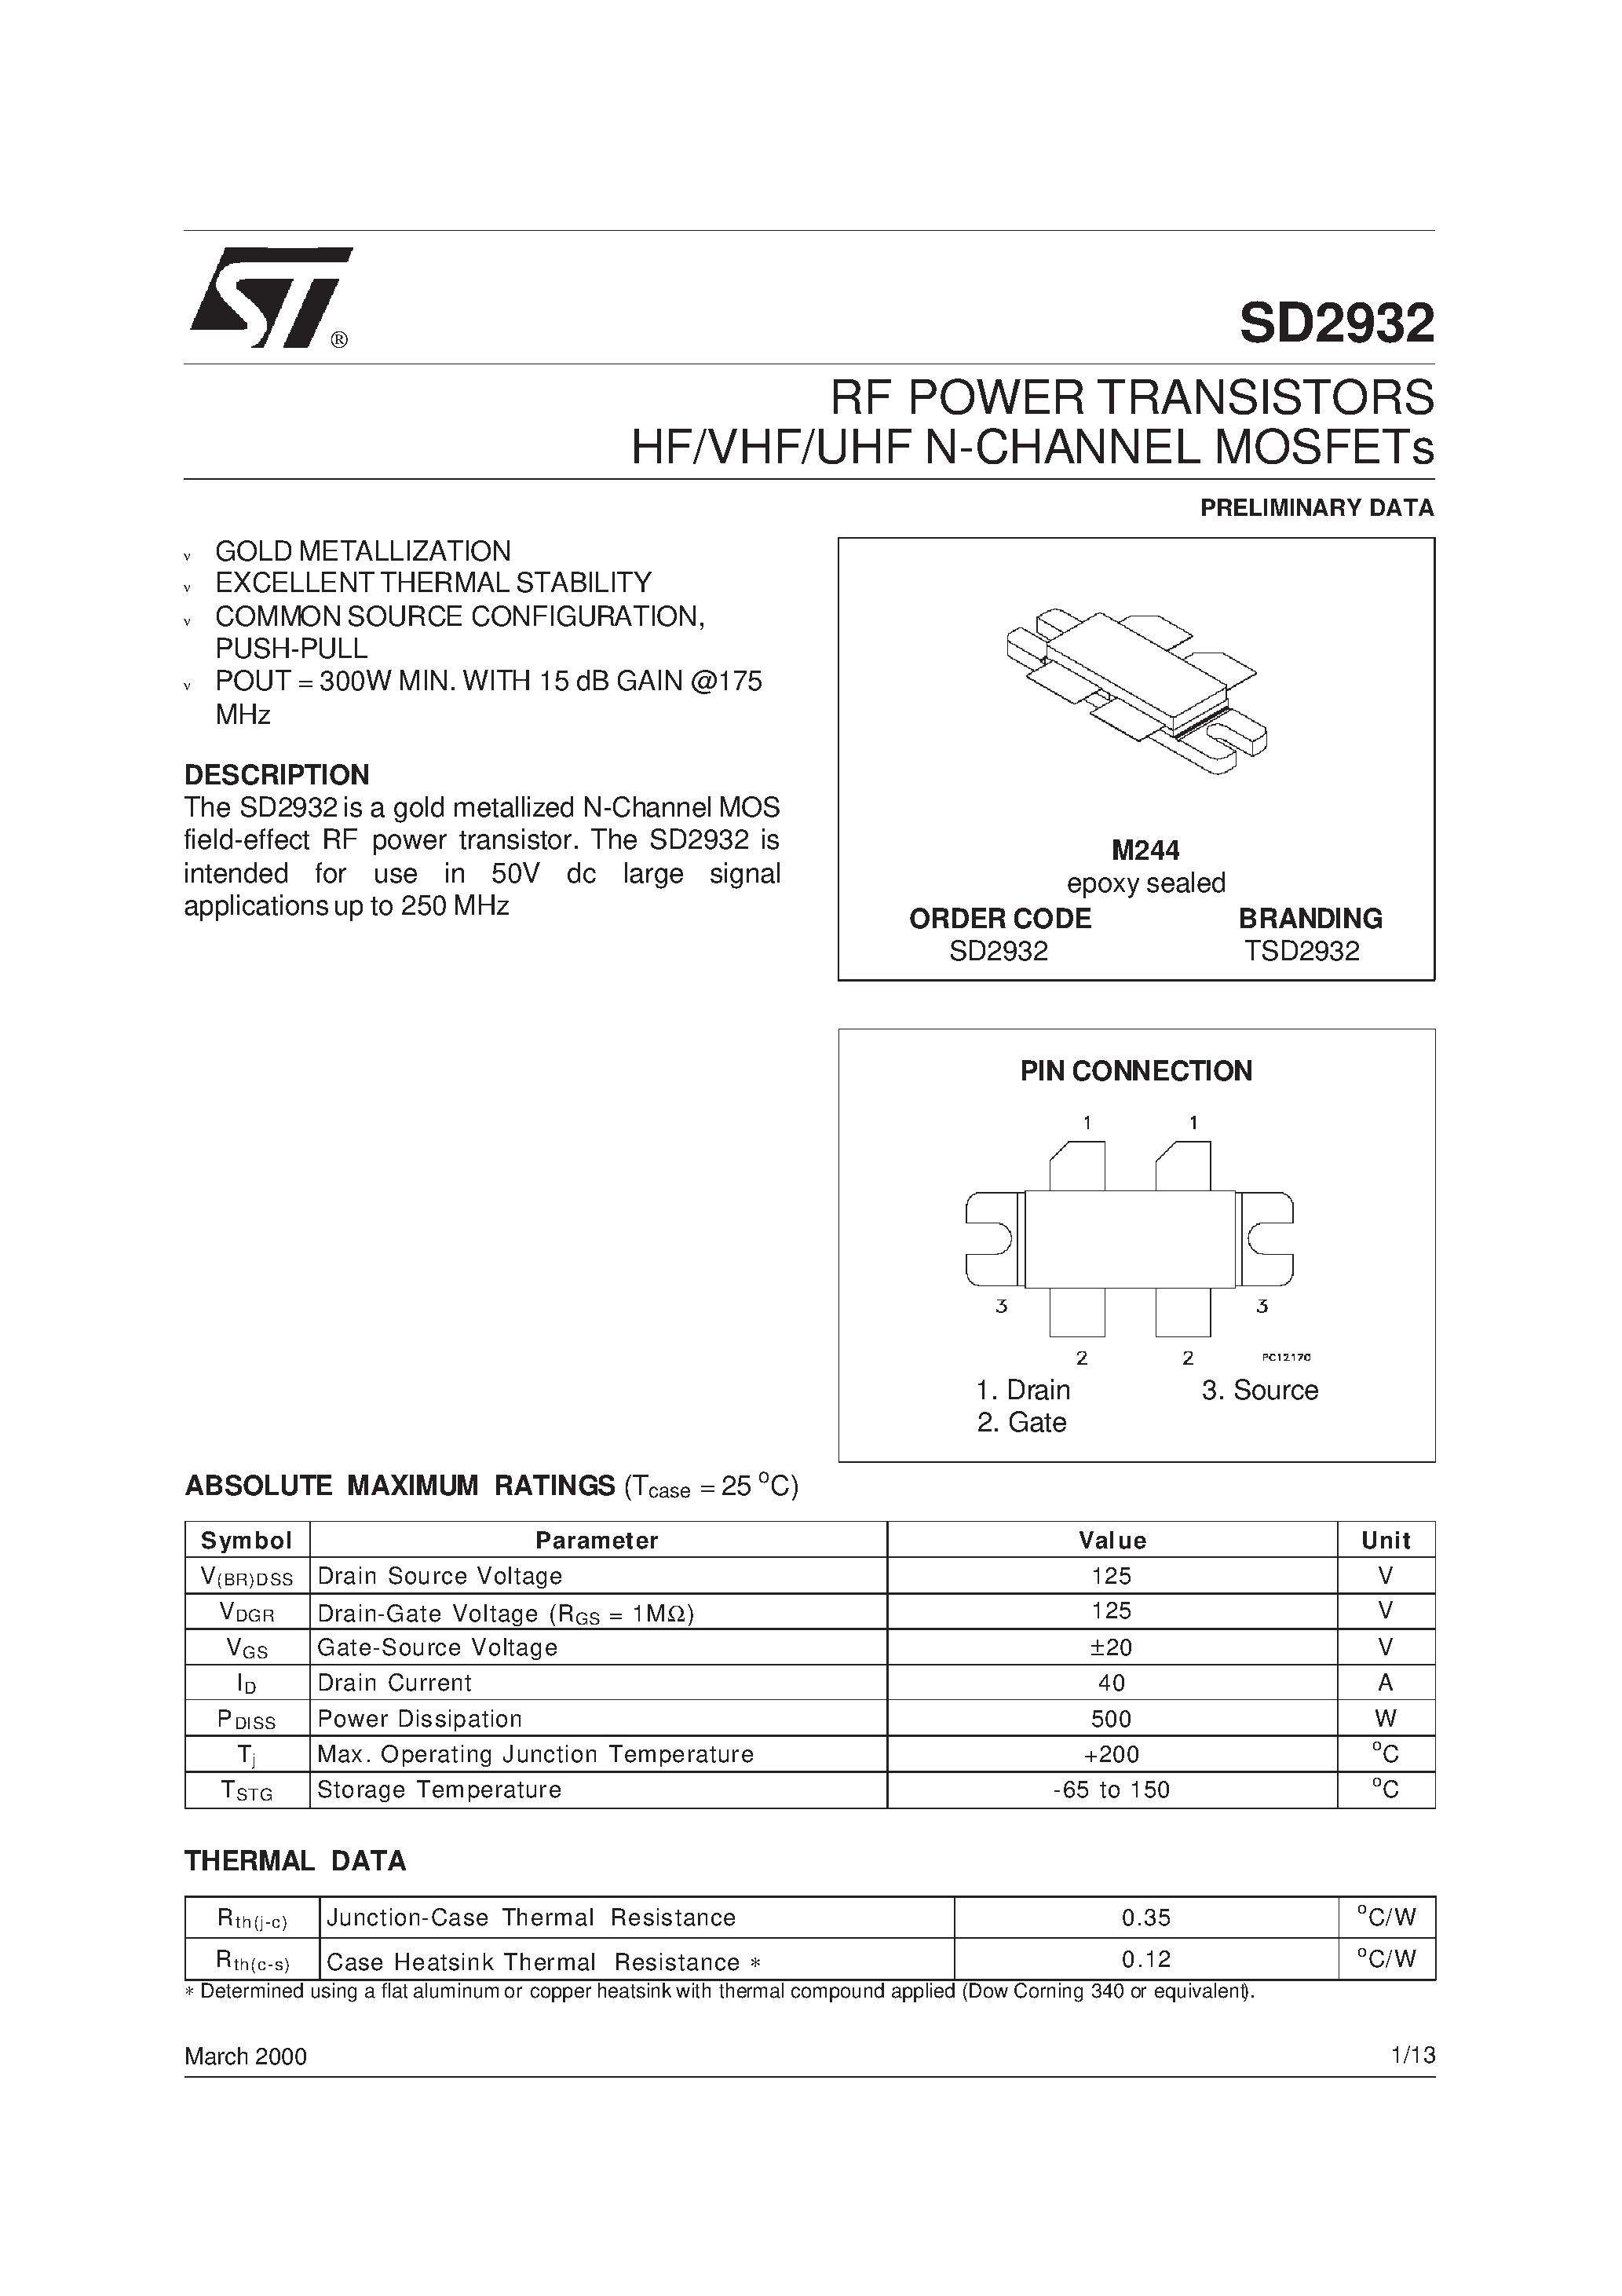 Datasheet SD2932 - RF POWER TRANSISTORS HF/VHF/UHF N-CHANNEL MOSFETs page 1